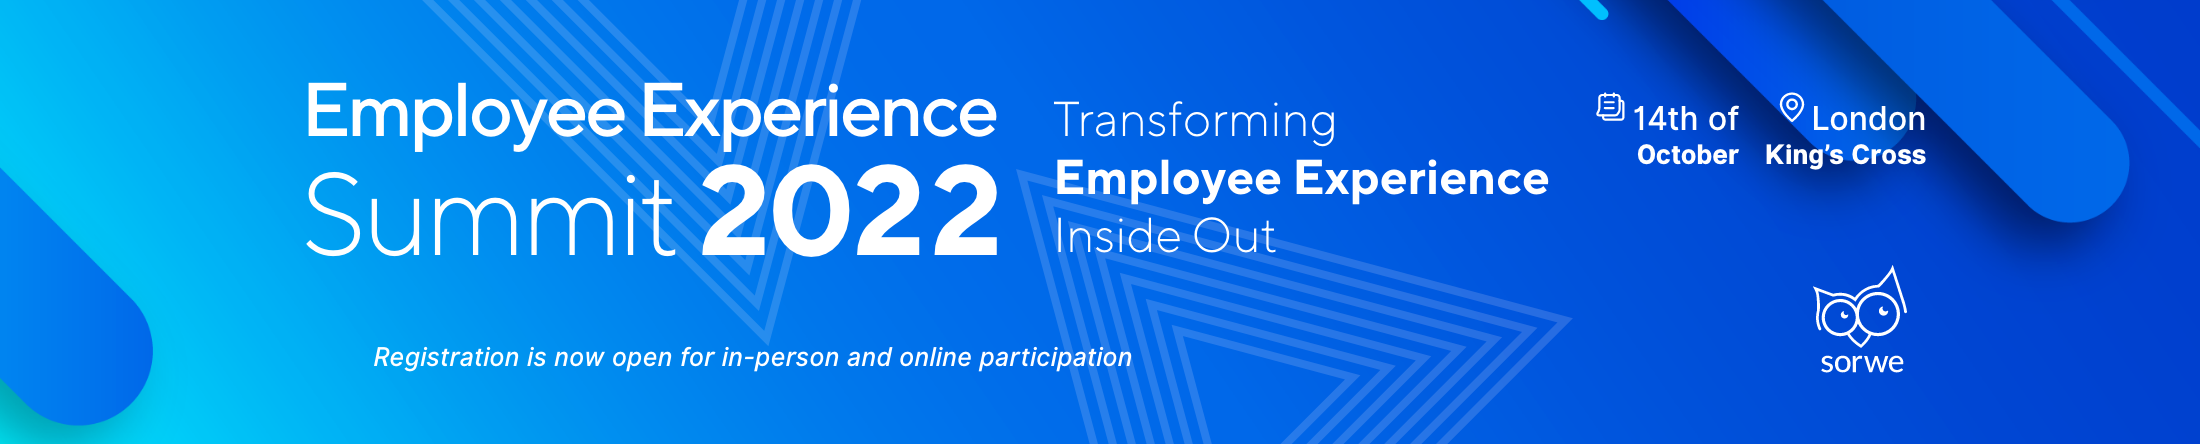 Employee Experience Summit 2022 Linkedin 2200x444 (1)